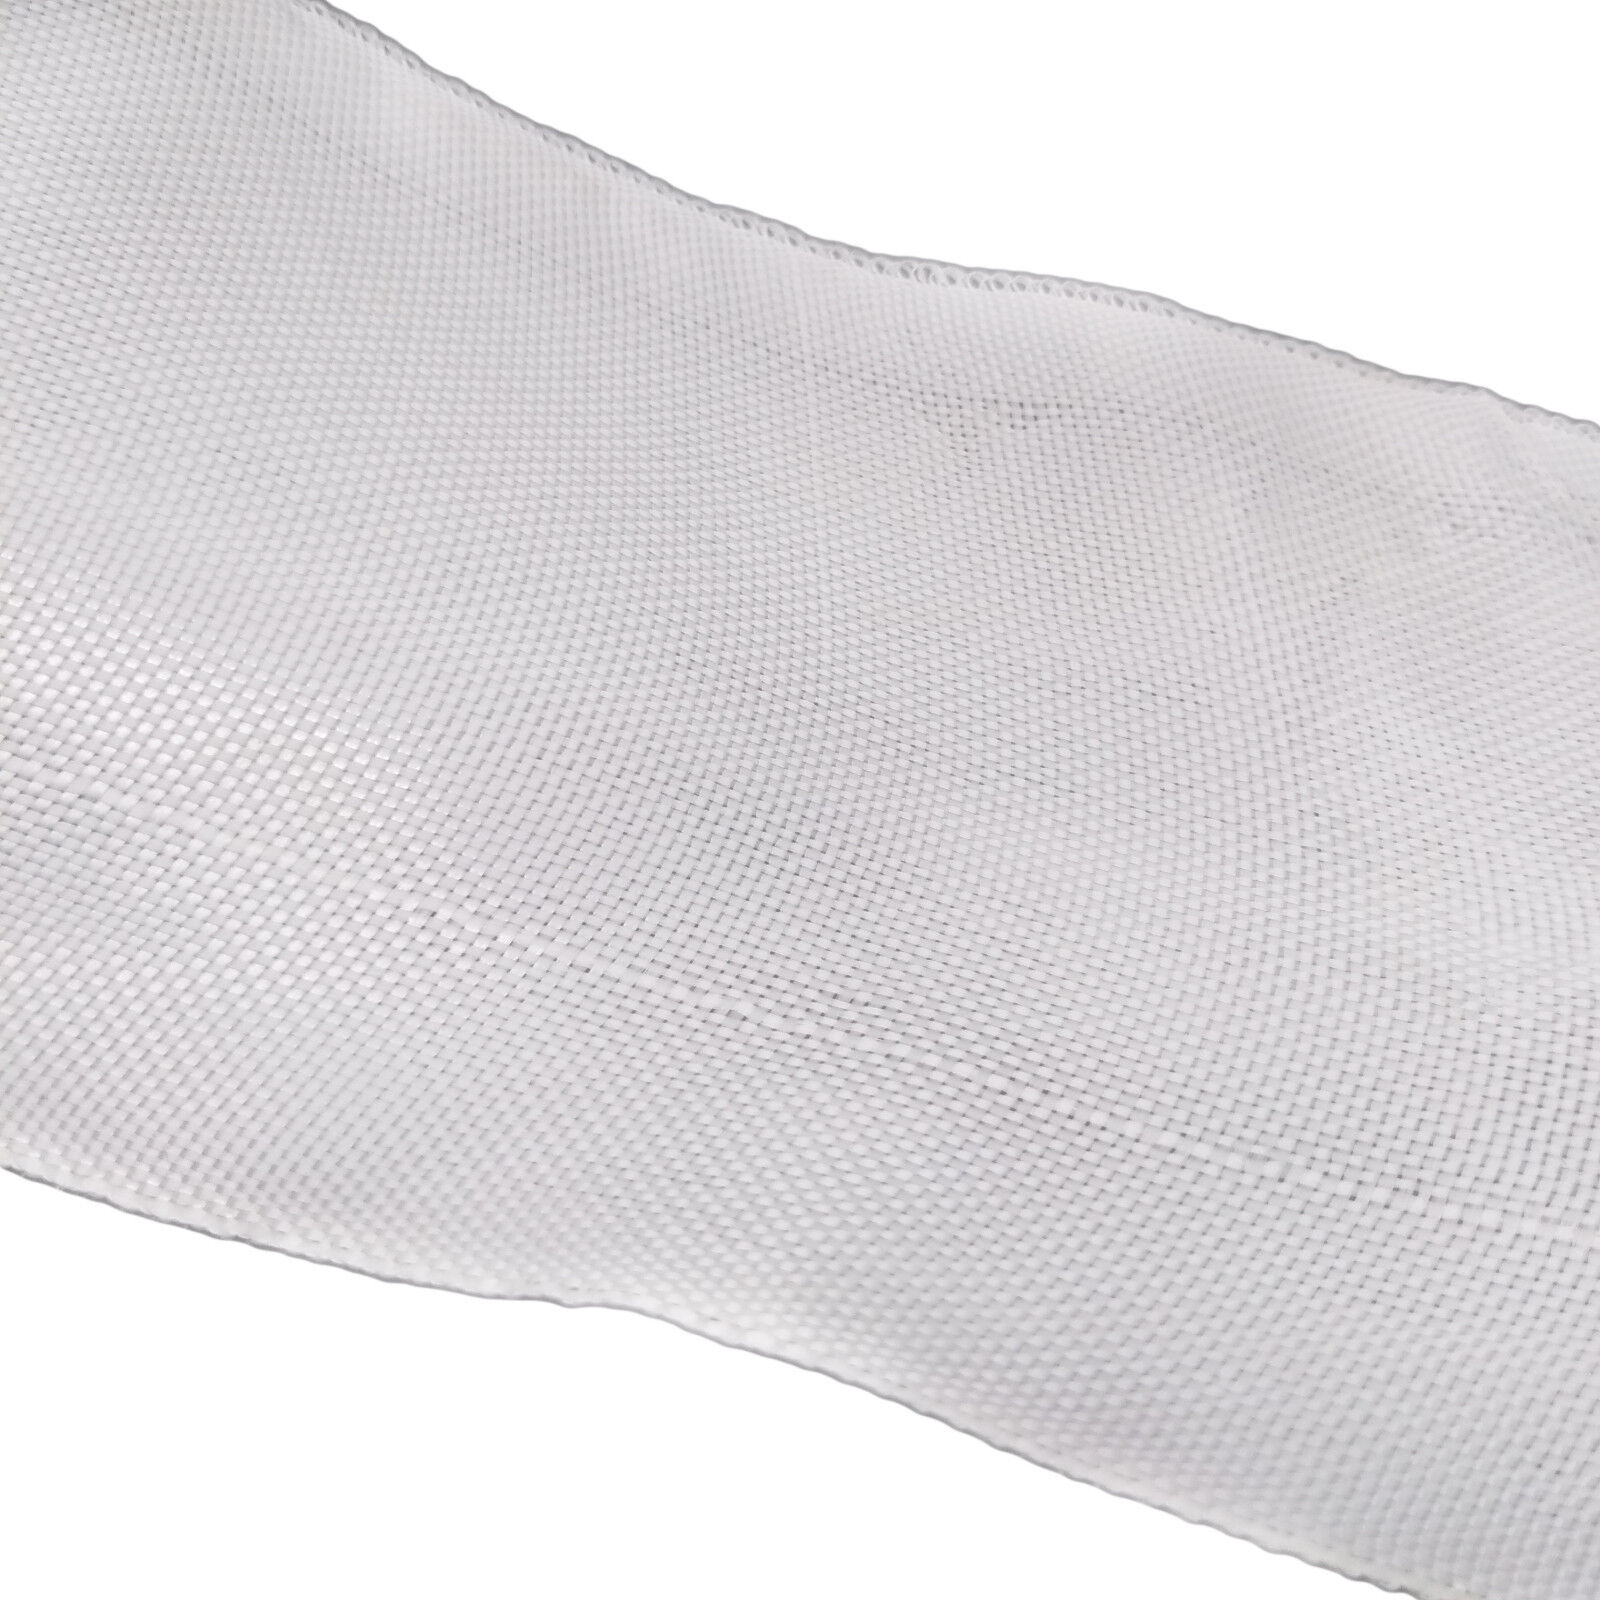 US Stock Fiber Glass Fabric Fiberglass Cloth Width 4 inch Length 98 feet Unbranded Does not apply - фотография #4